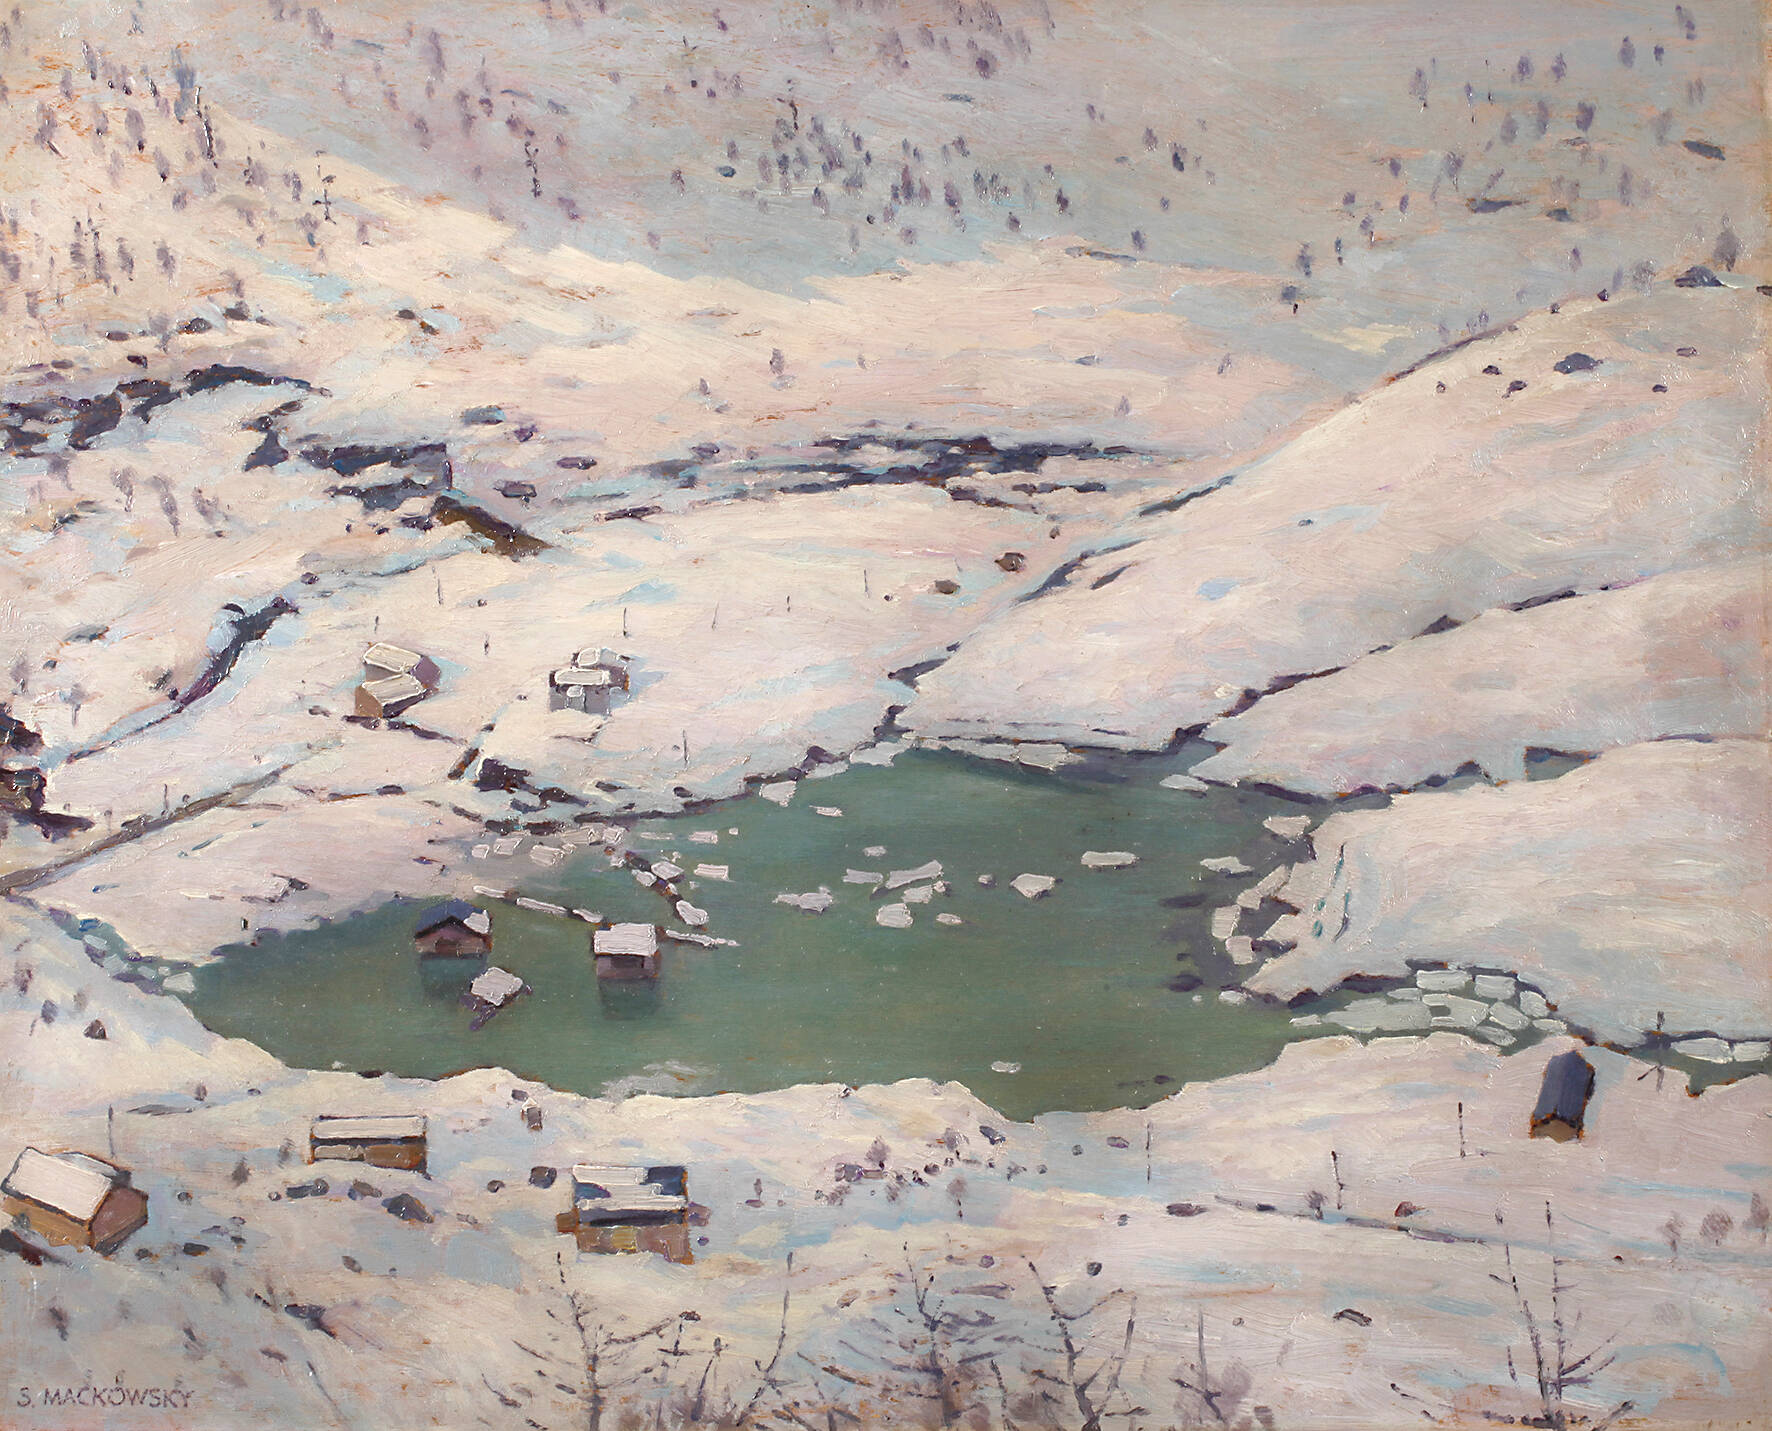 Siegfried Mackowsky, "Winterlandschaft mit Bergsee"